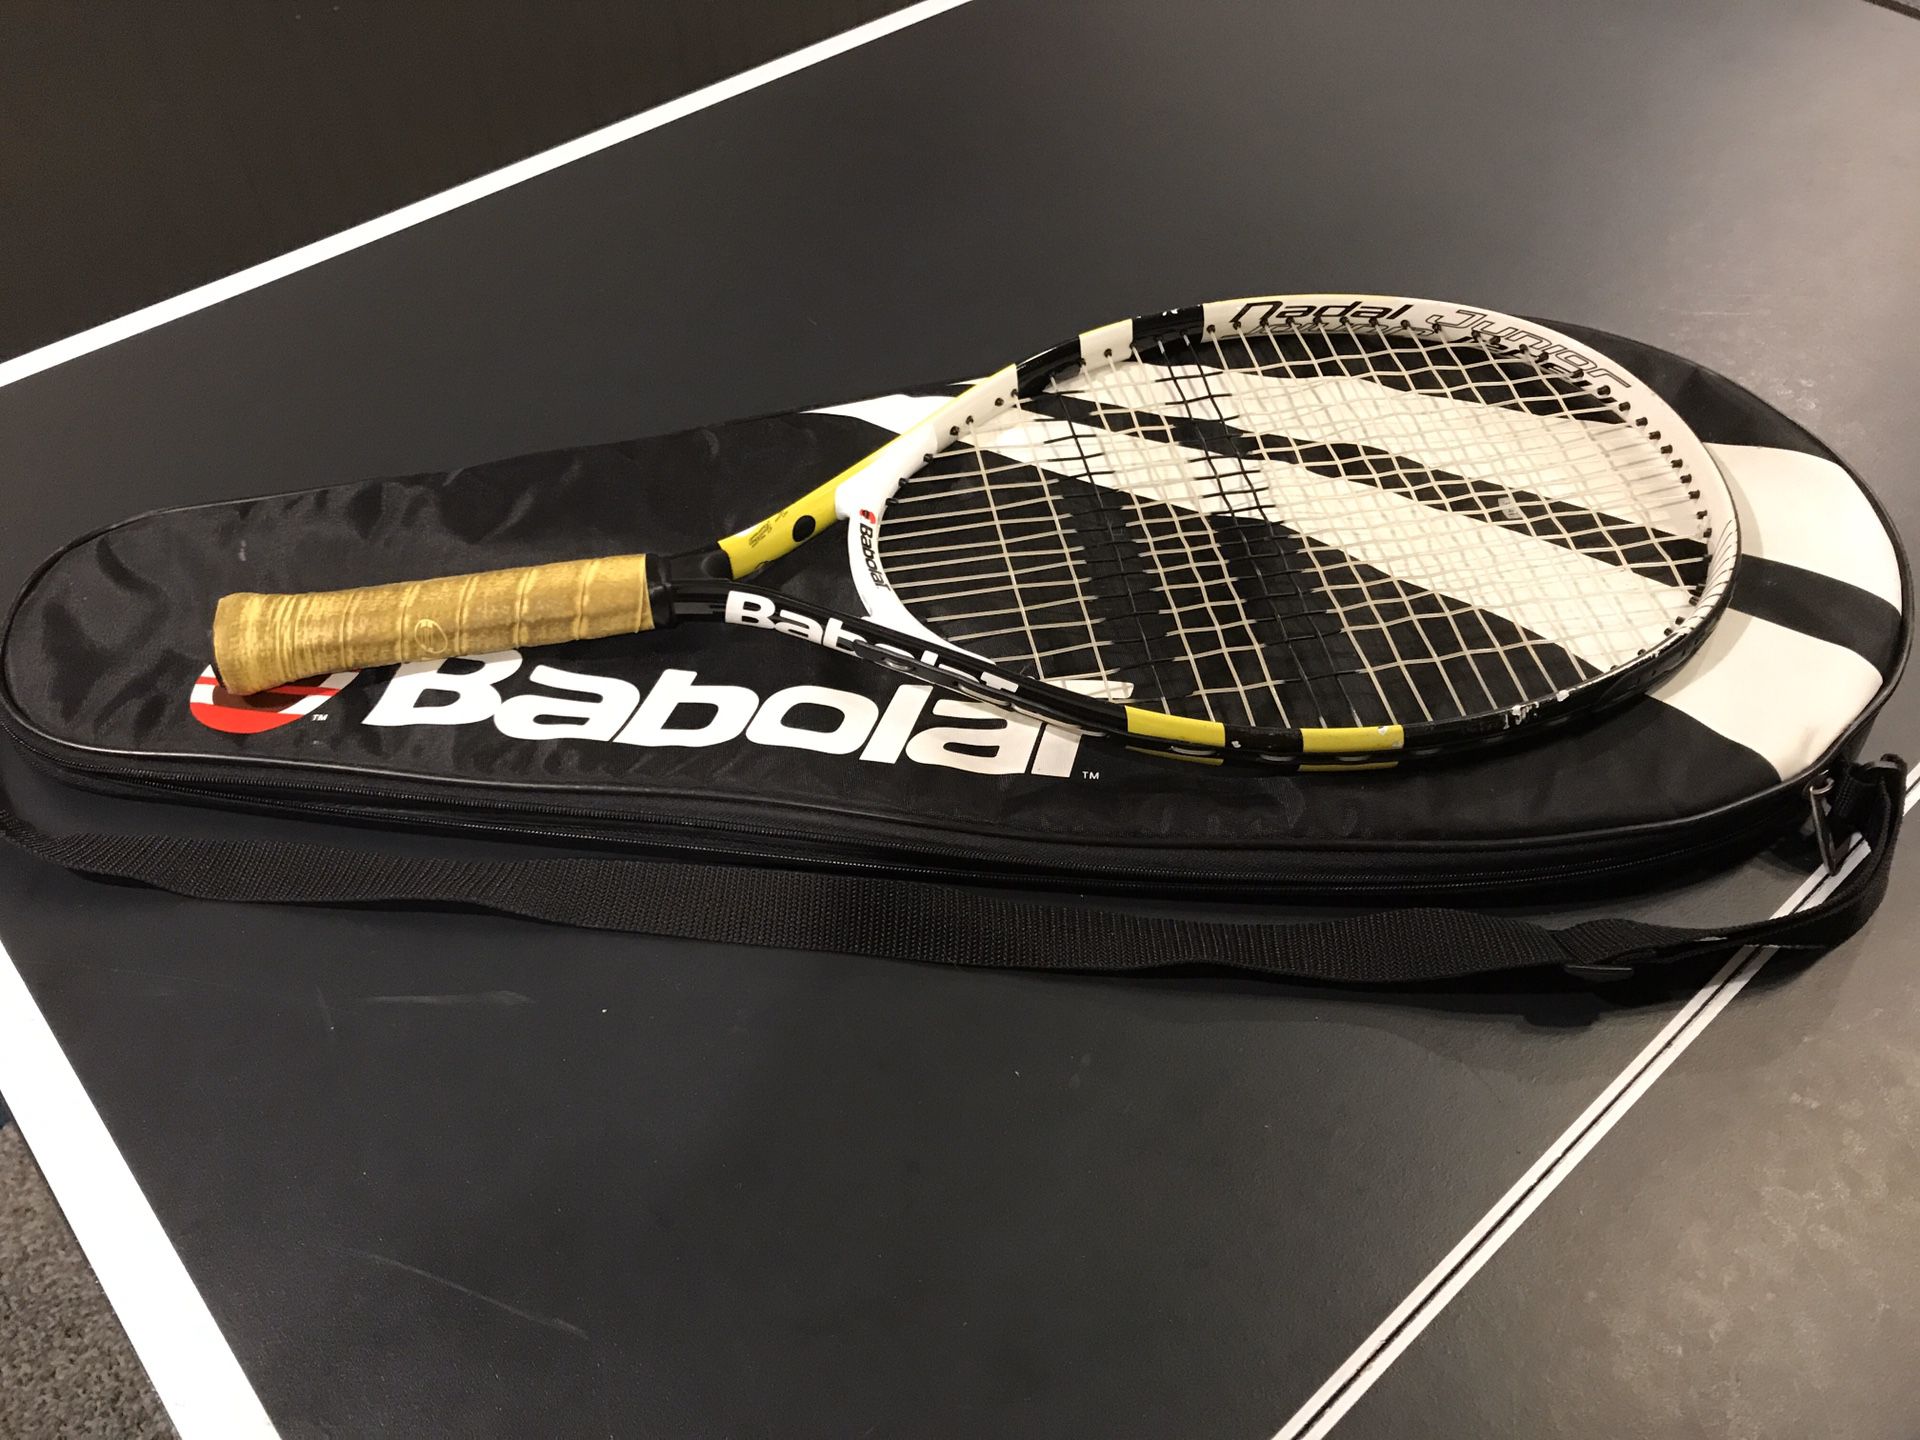 Youth Tennis Racket - Babolat Nadal Jr 125